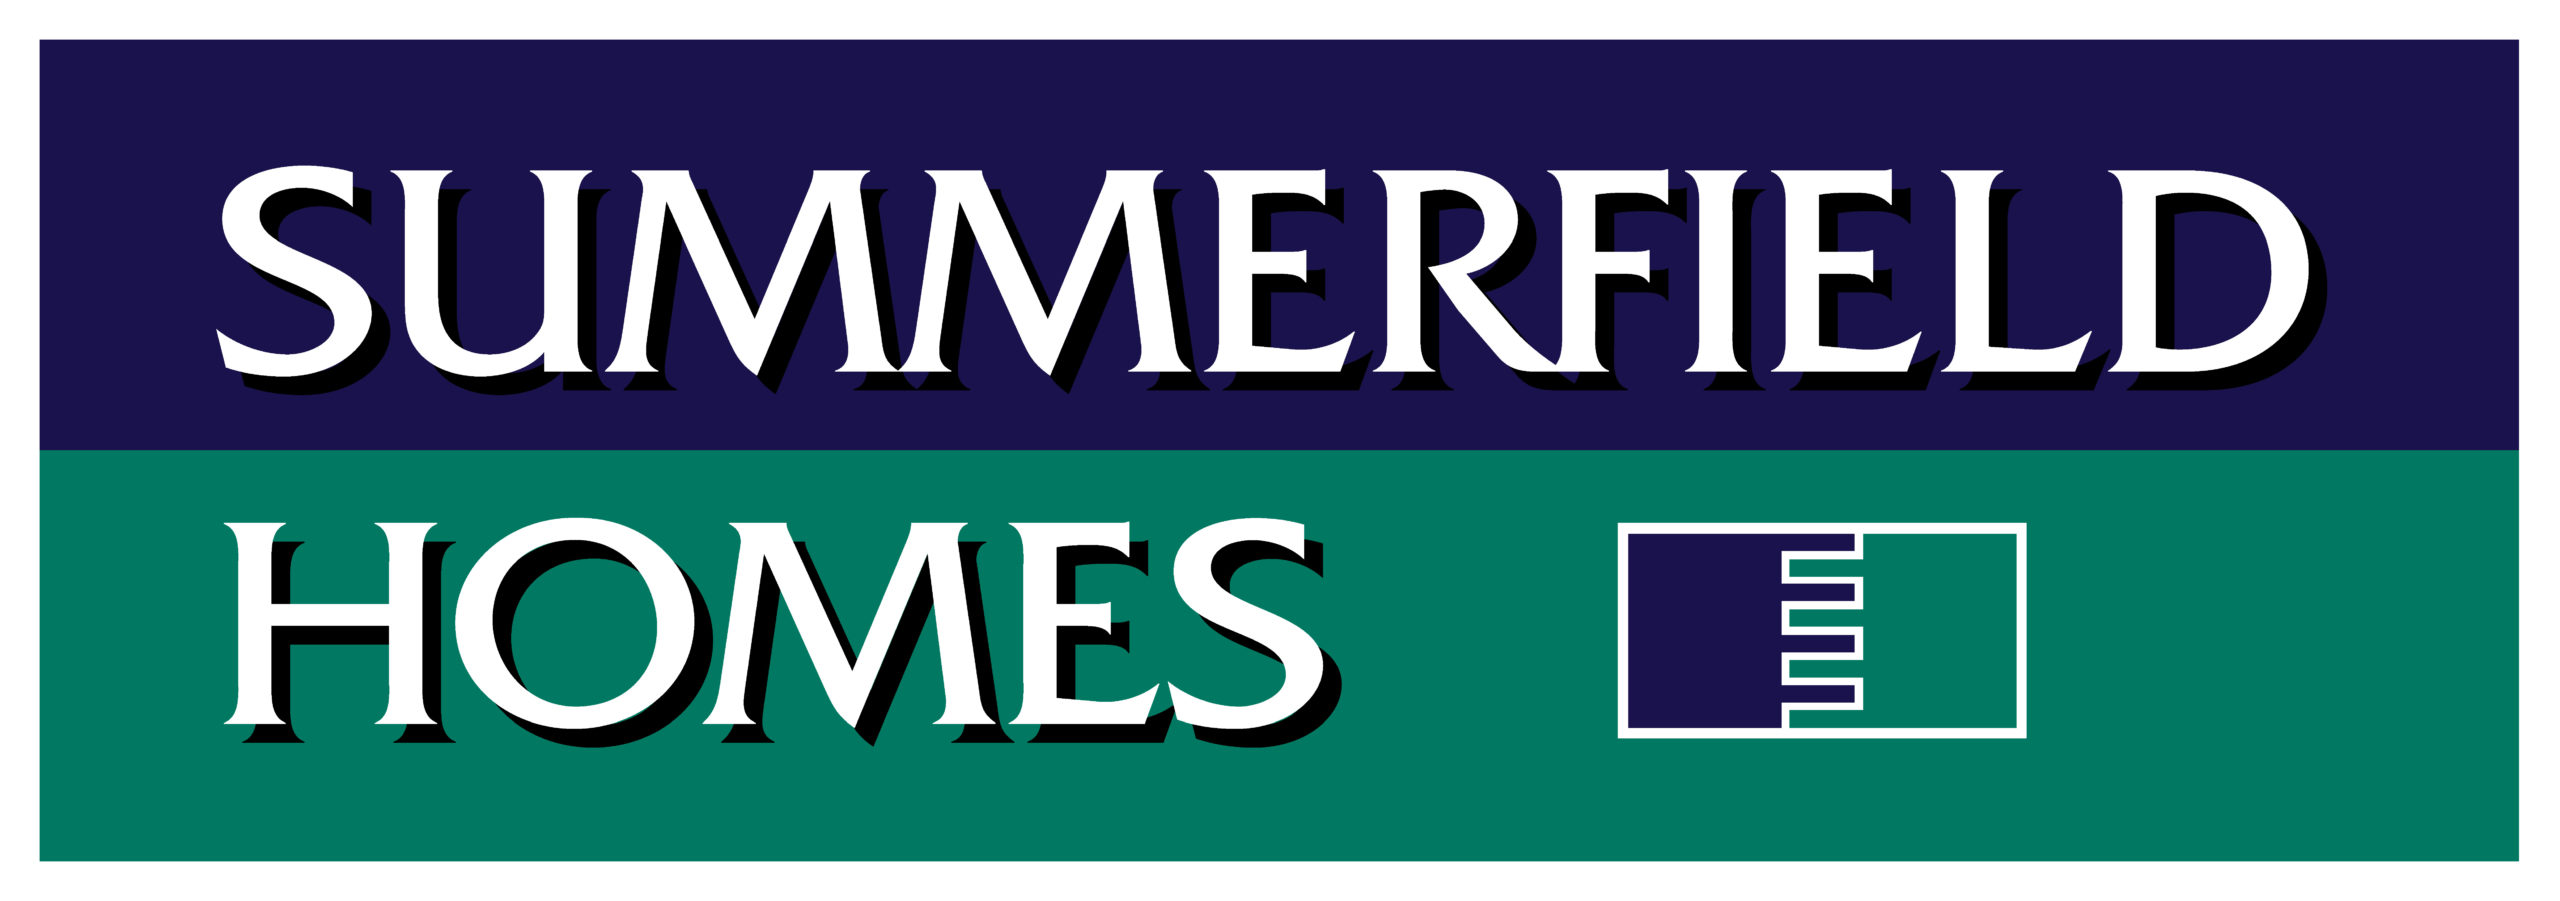 Summerfield Homes logo